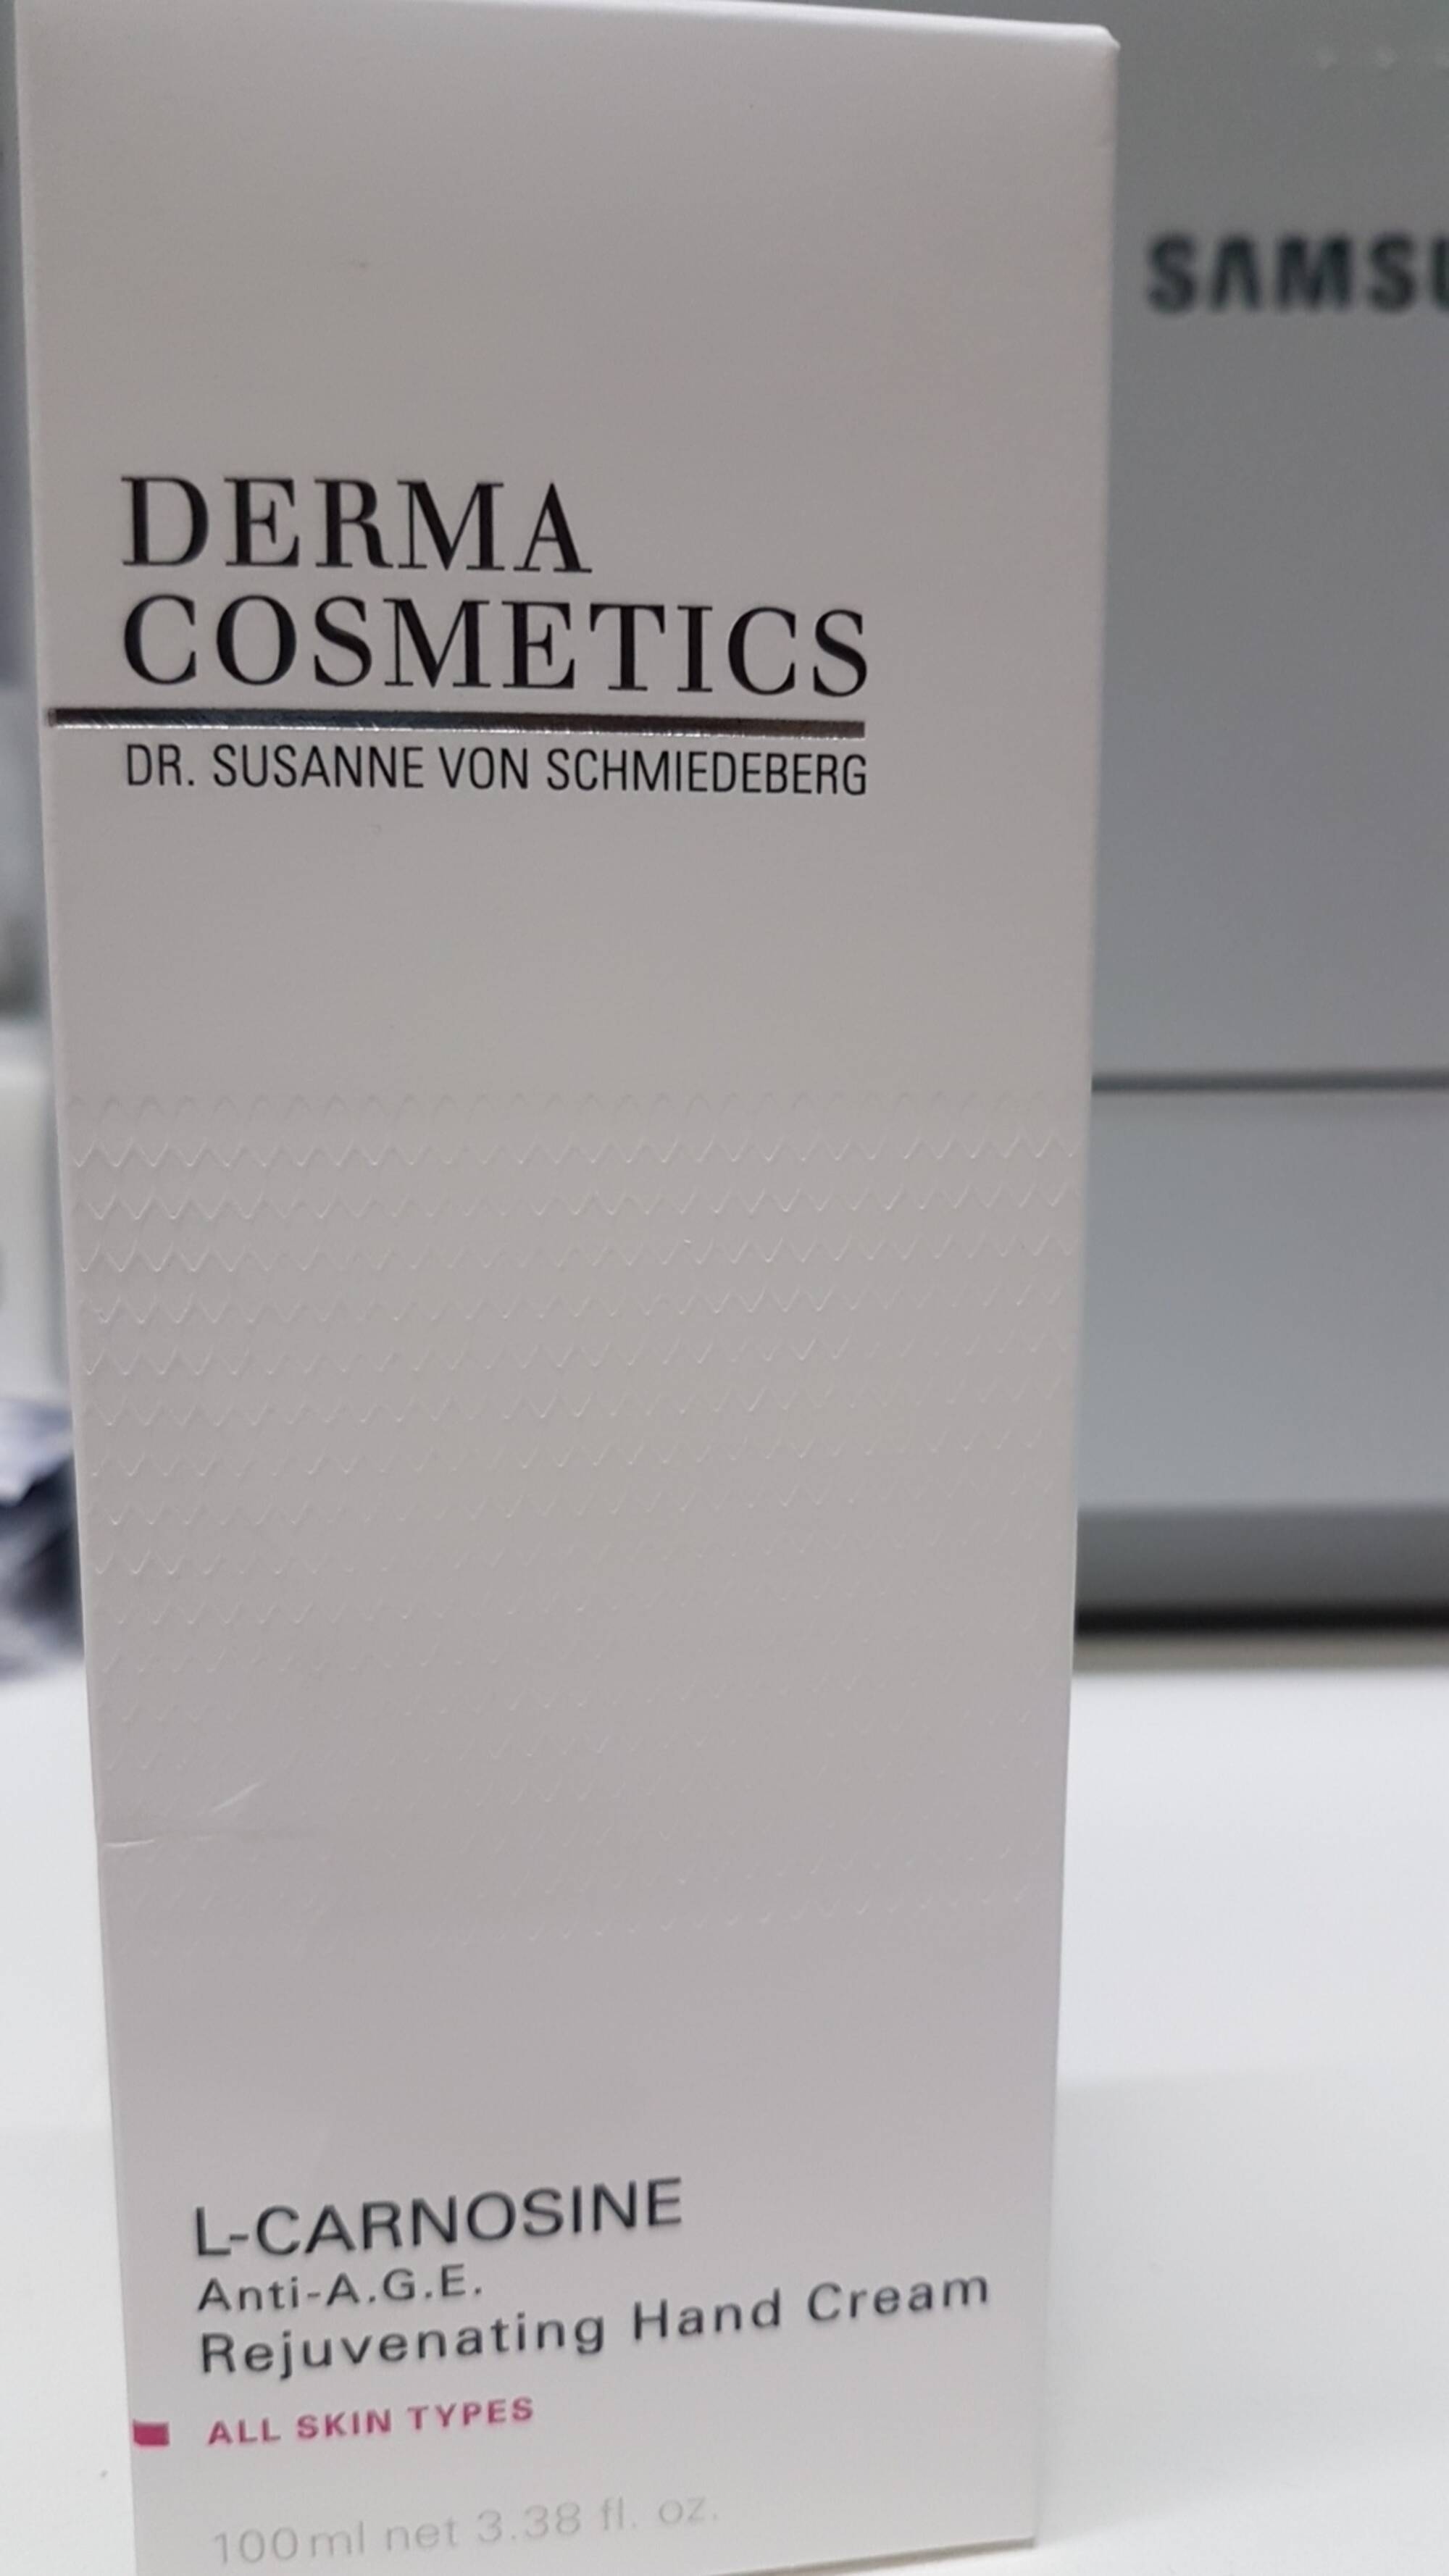 DERMA COSMETICS - L-carnosine - Anti-age rejuvenating hand cream